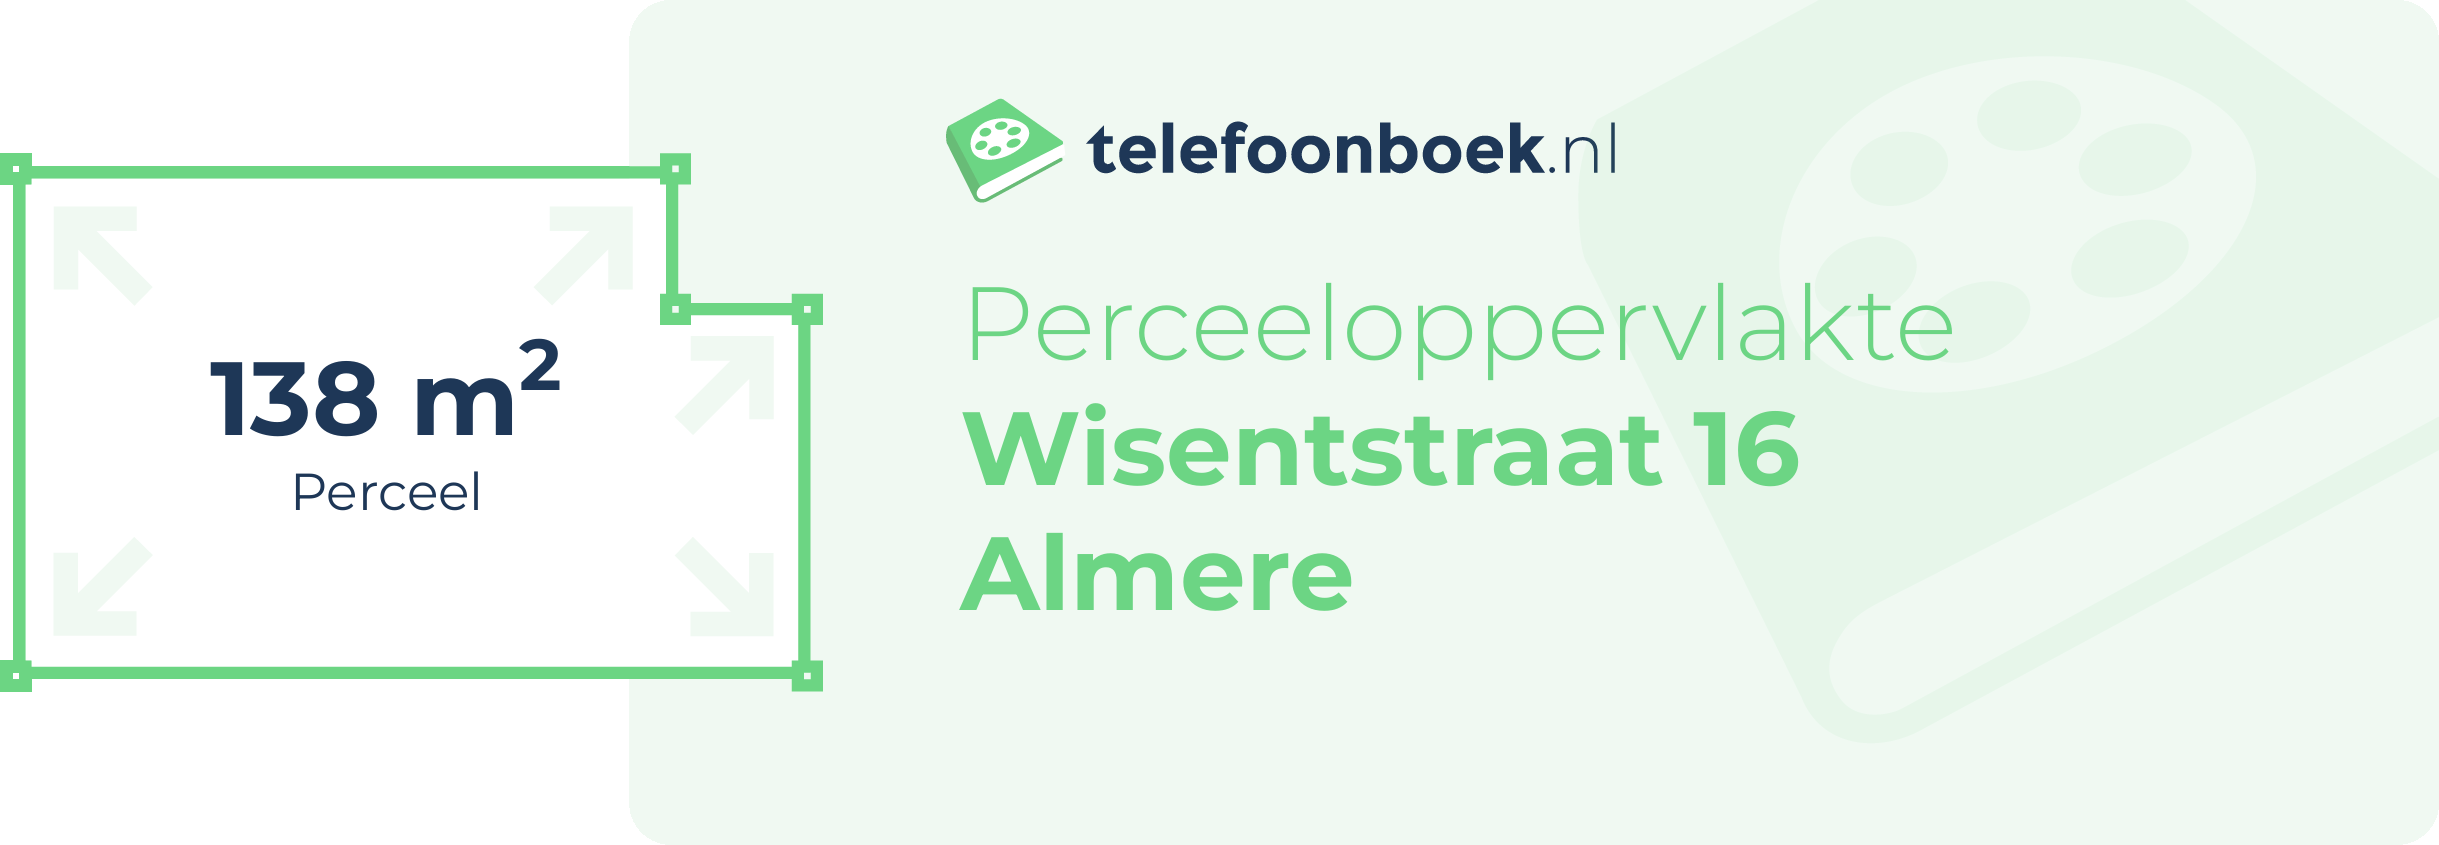 Perceeloppervlakte Wisentstraat 16 Almere